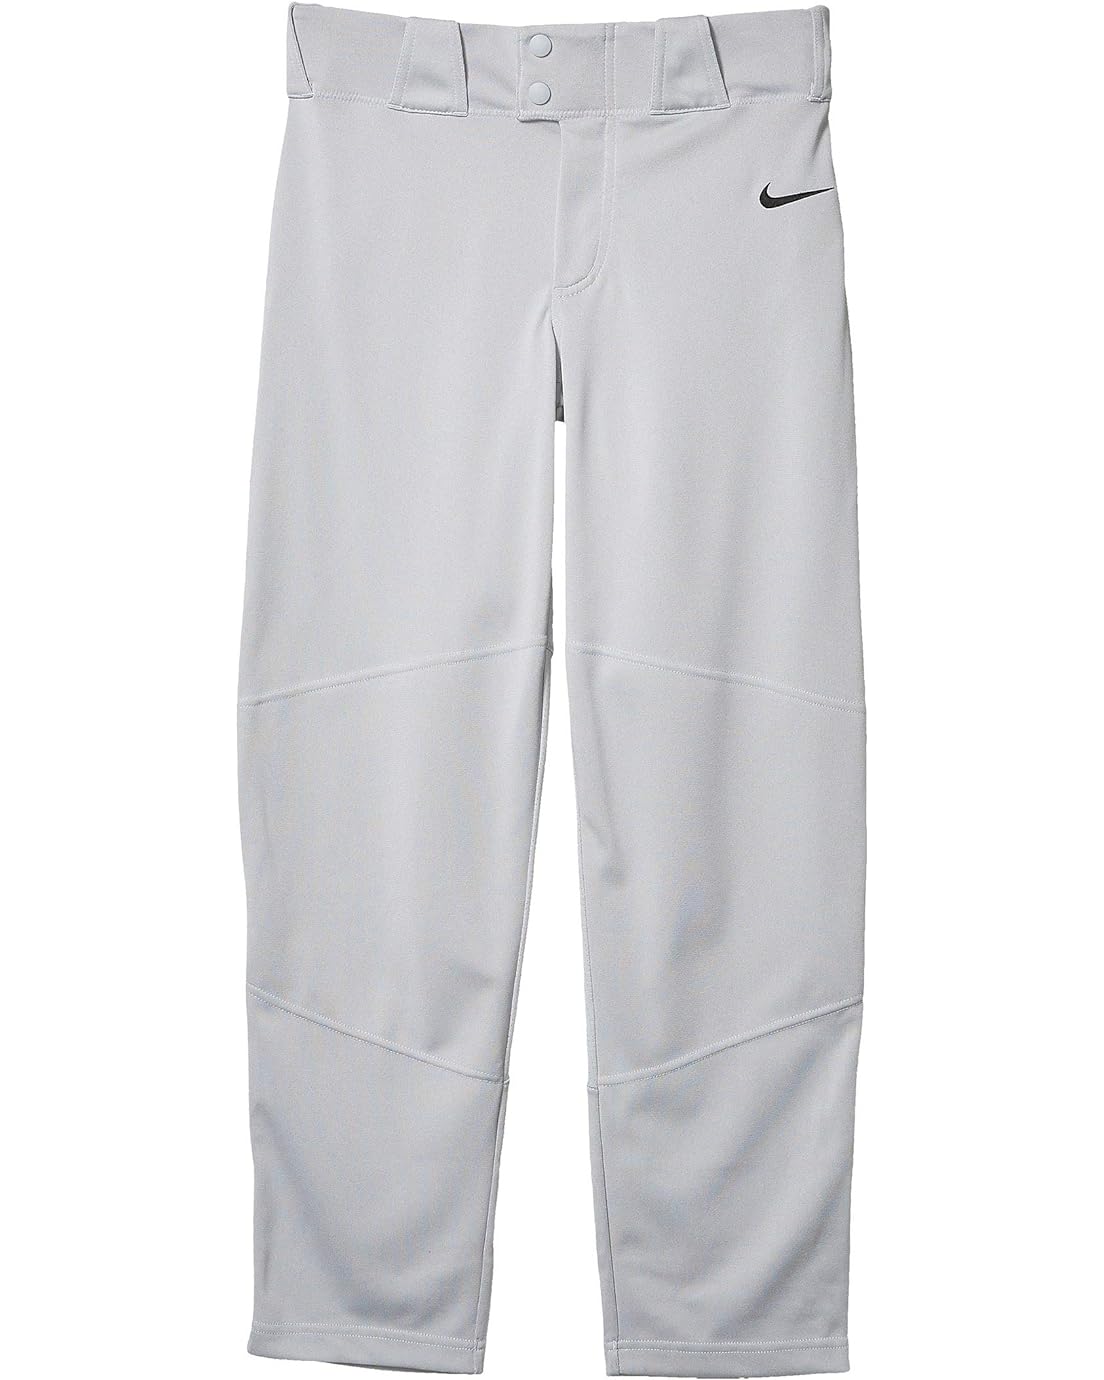 Nike Kids Vapor Select Baseball Pants (Big Kids)